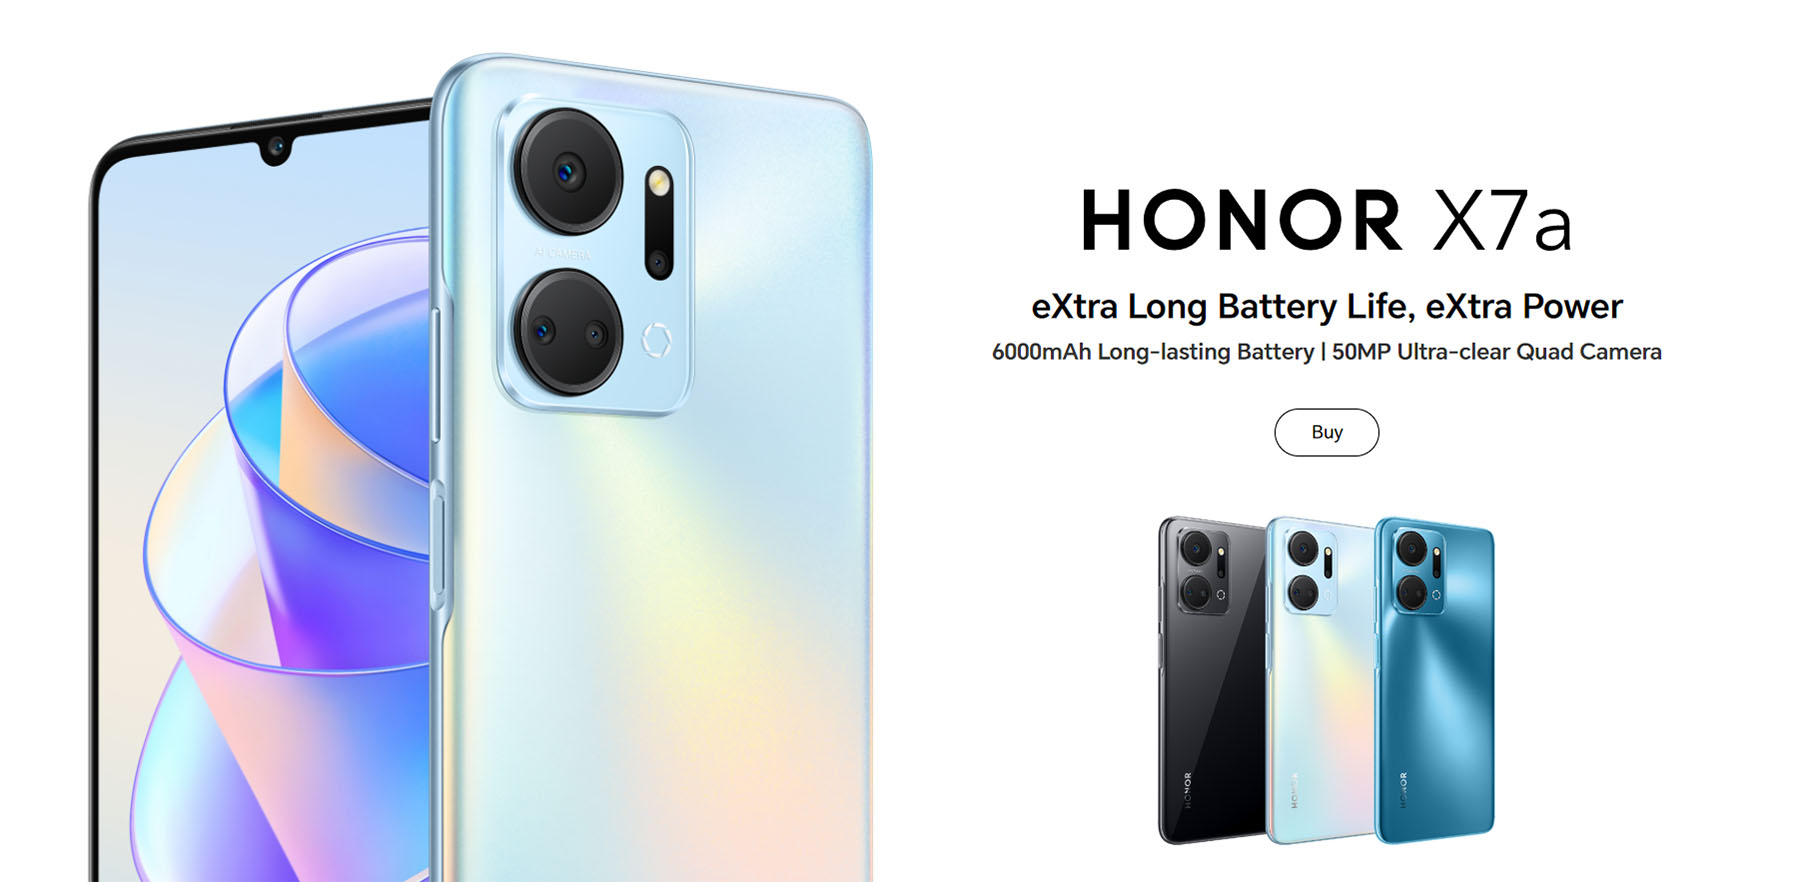 HONOR X7a 5G smartphone